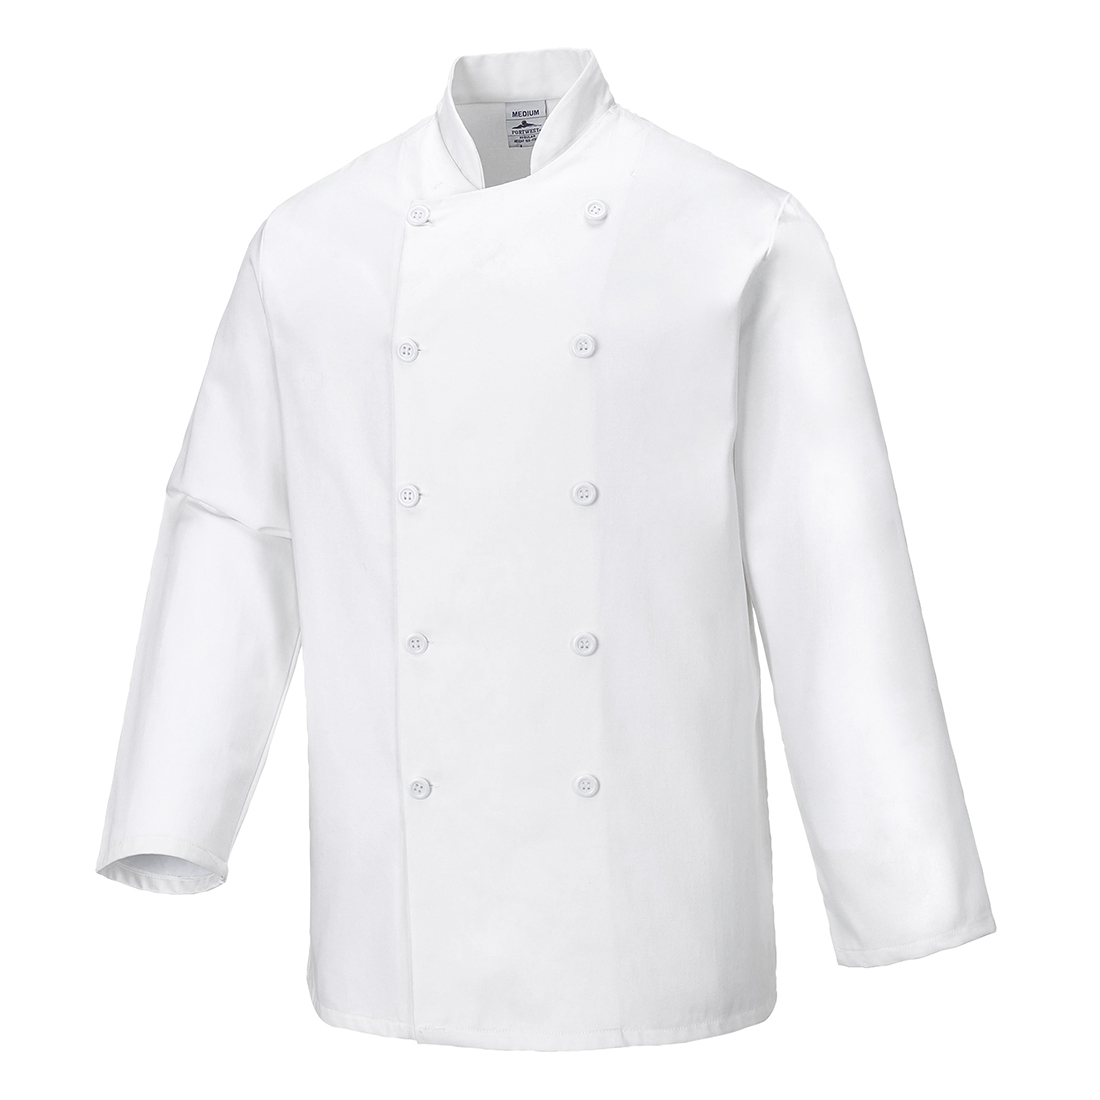 Sussex Chefs Jacket L/S - White